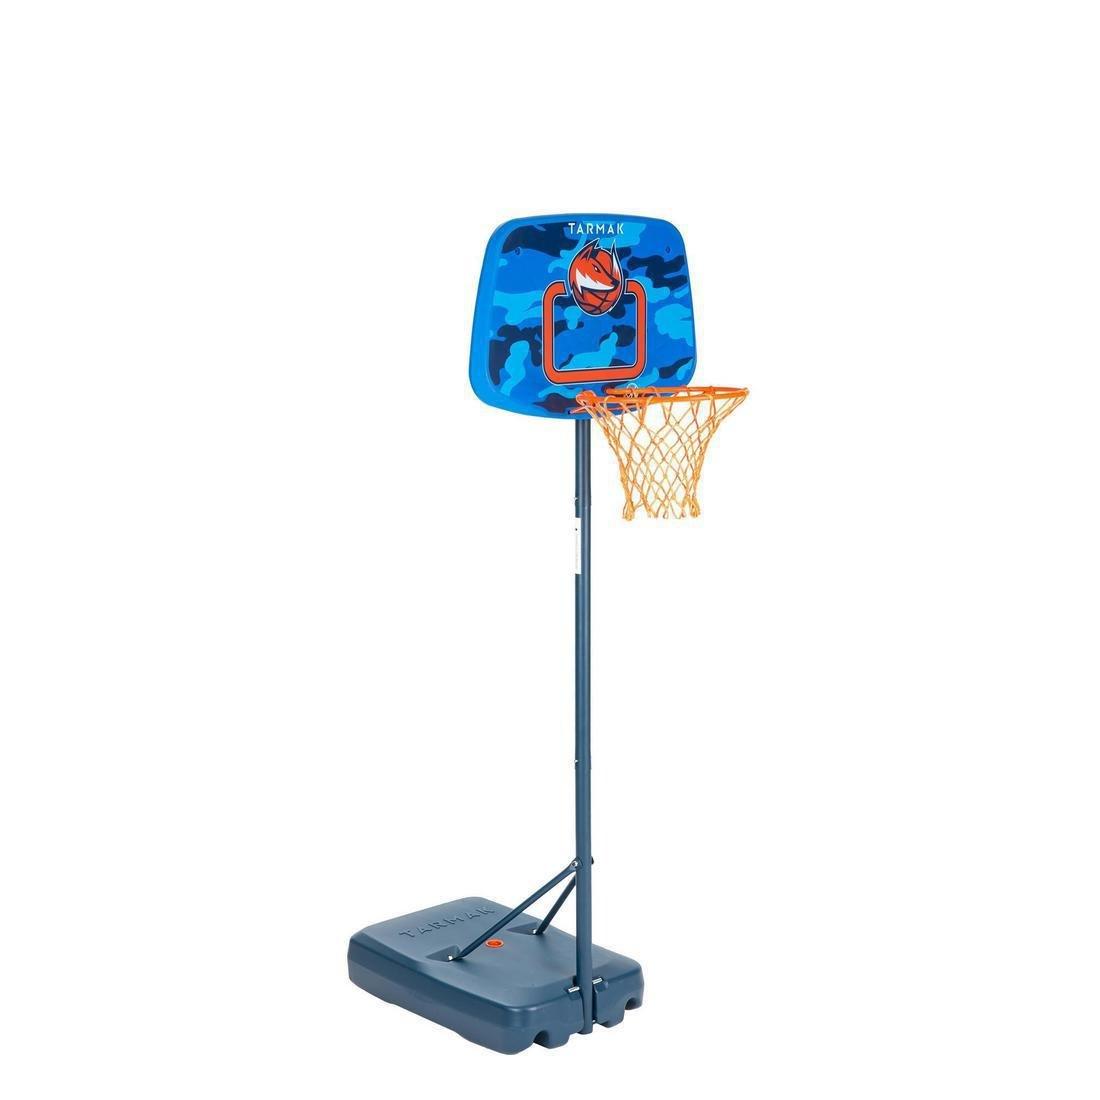 TARMAK - Unisex Kids Basketball - K500 (Up To Age 8), Blue